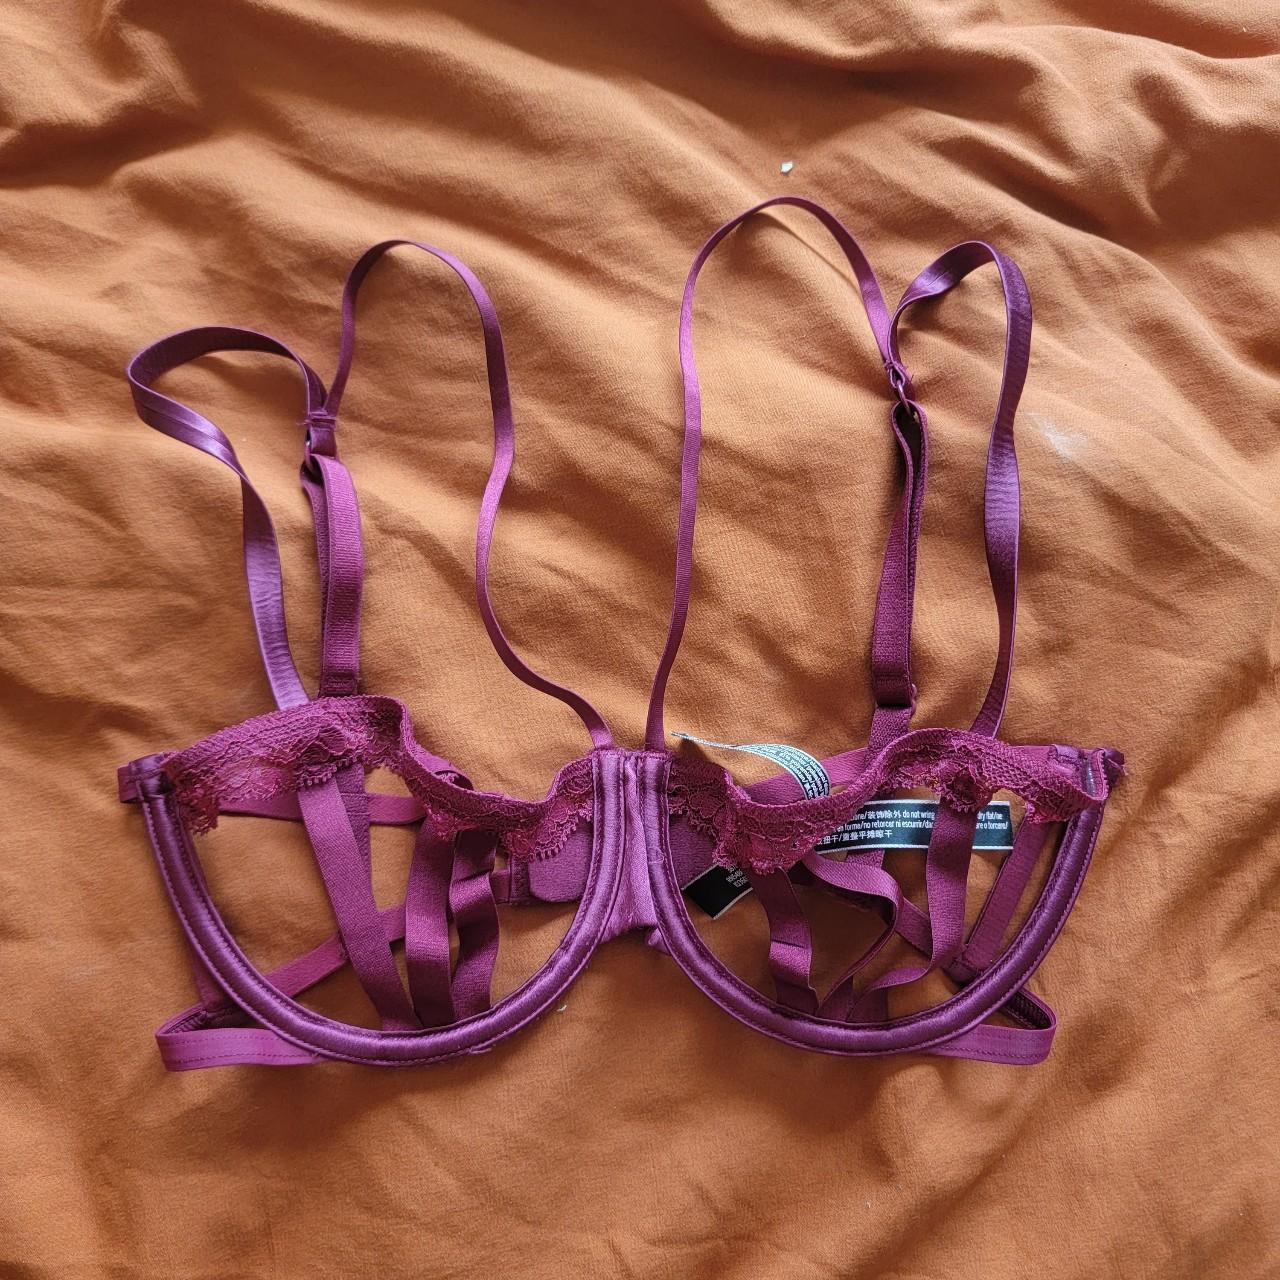 Victoria's Secret cage bra , Size 32C, Good condition